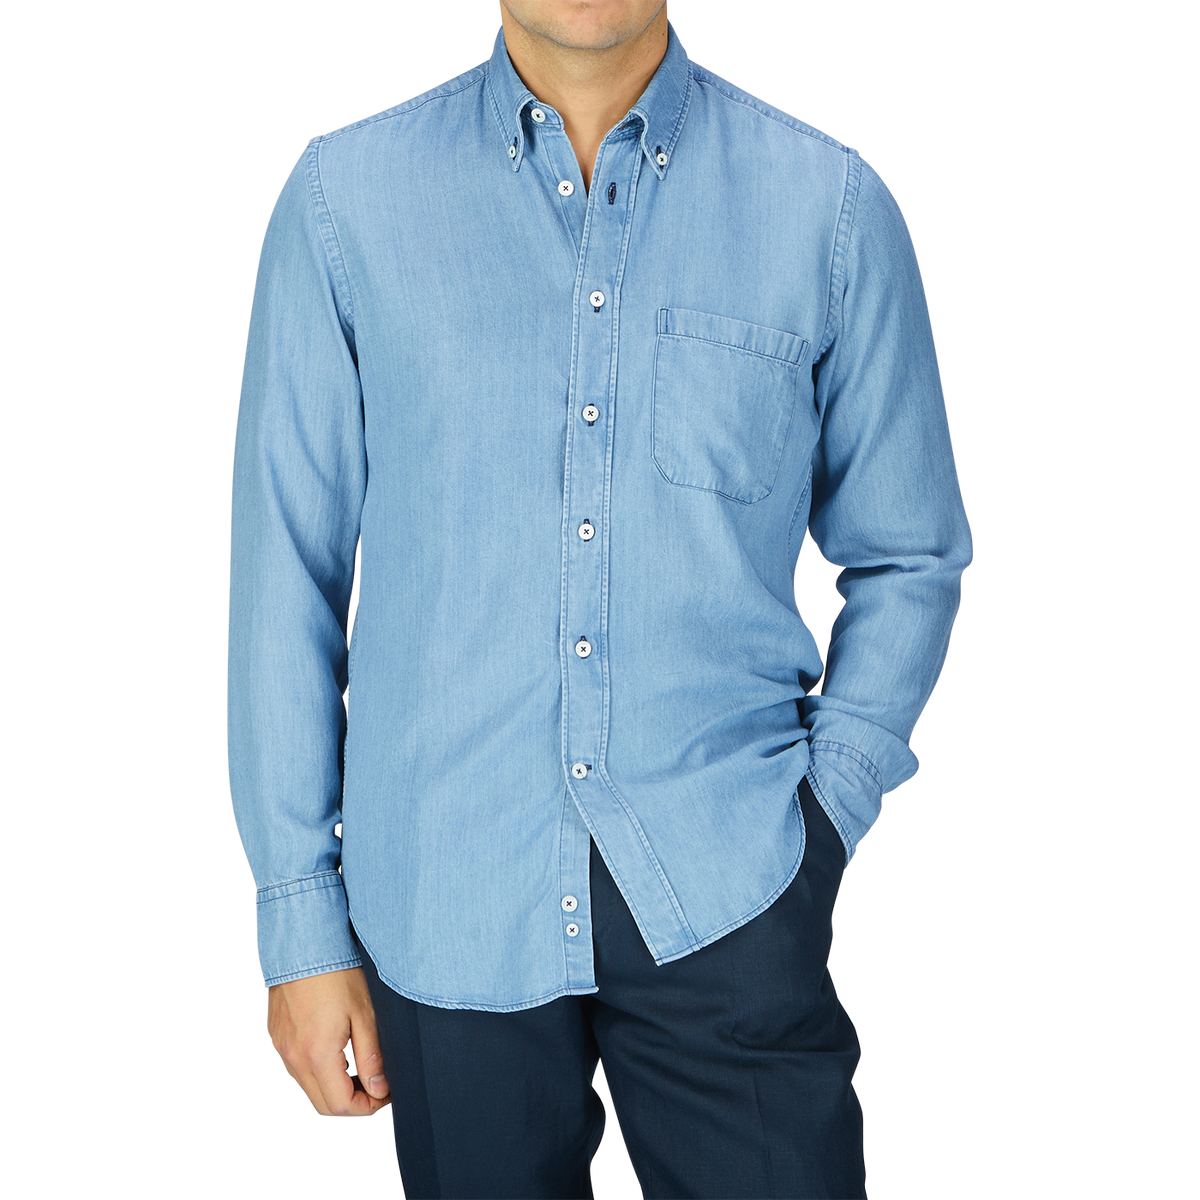 A man wearing a Washed Blue Cotton Denim BD Casual Shirt by Canali.